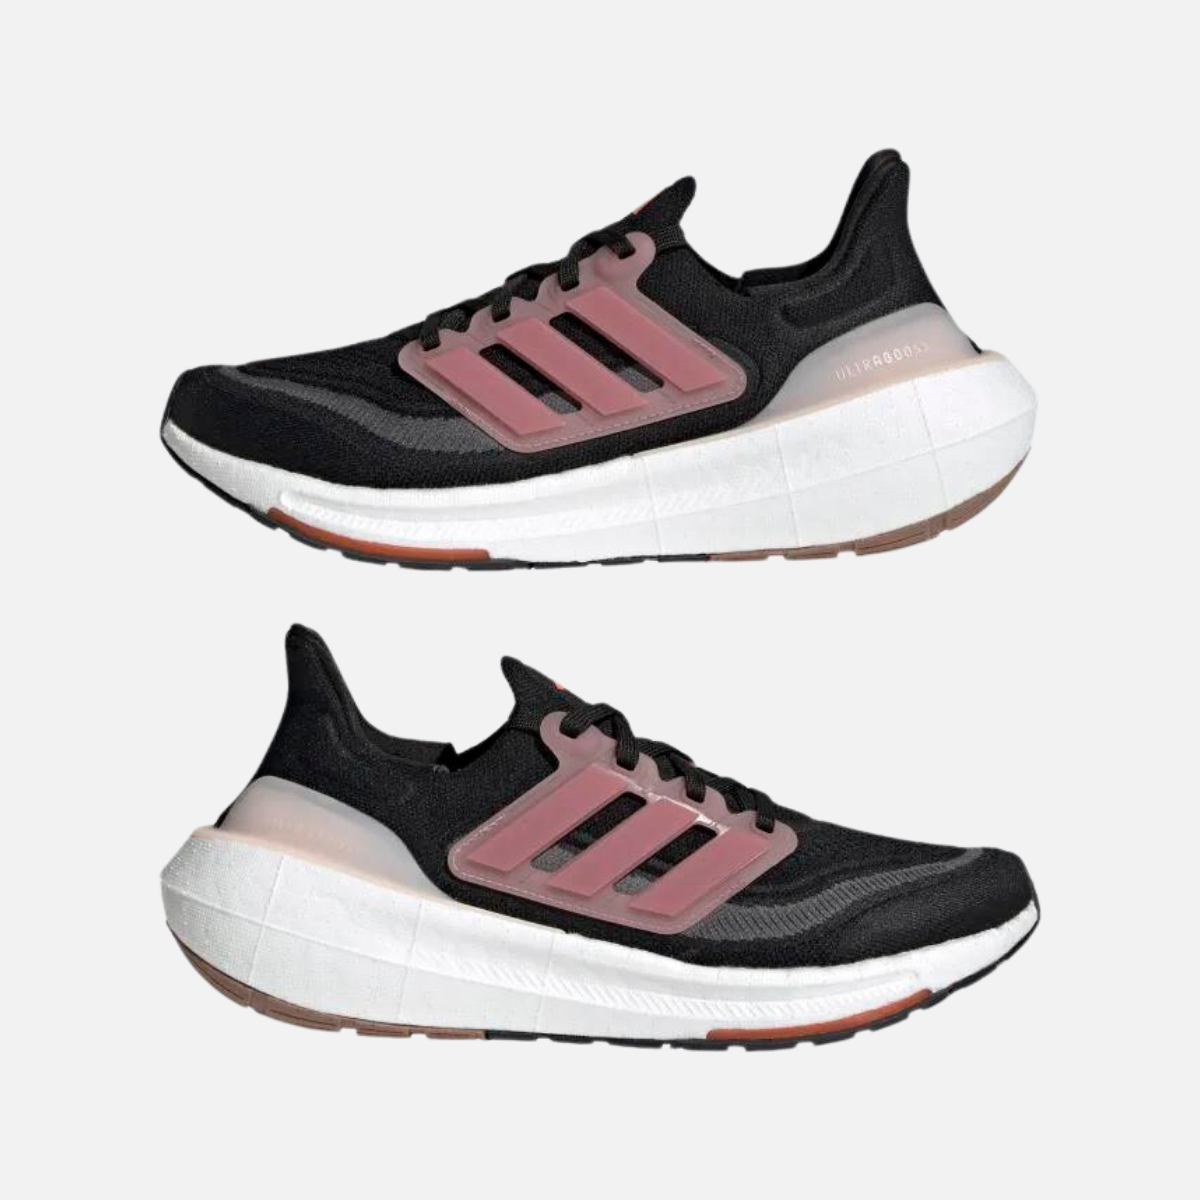 Adidas Ultraboost Light Women running Shoes -Core Black/Pink Strata/Grey Six